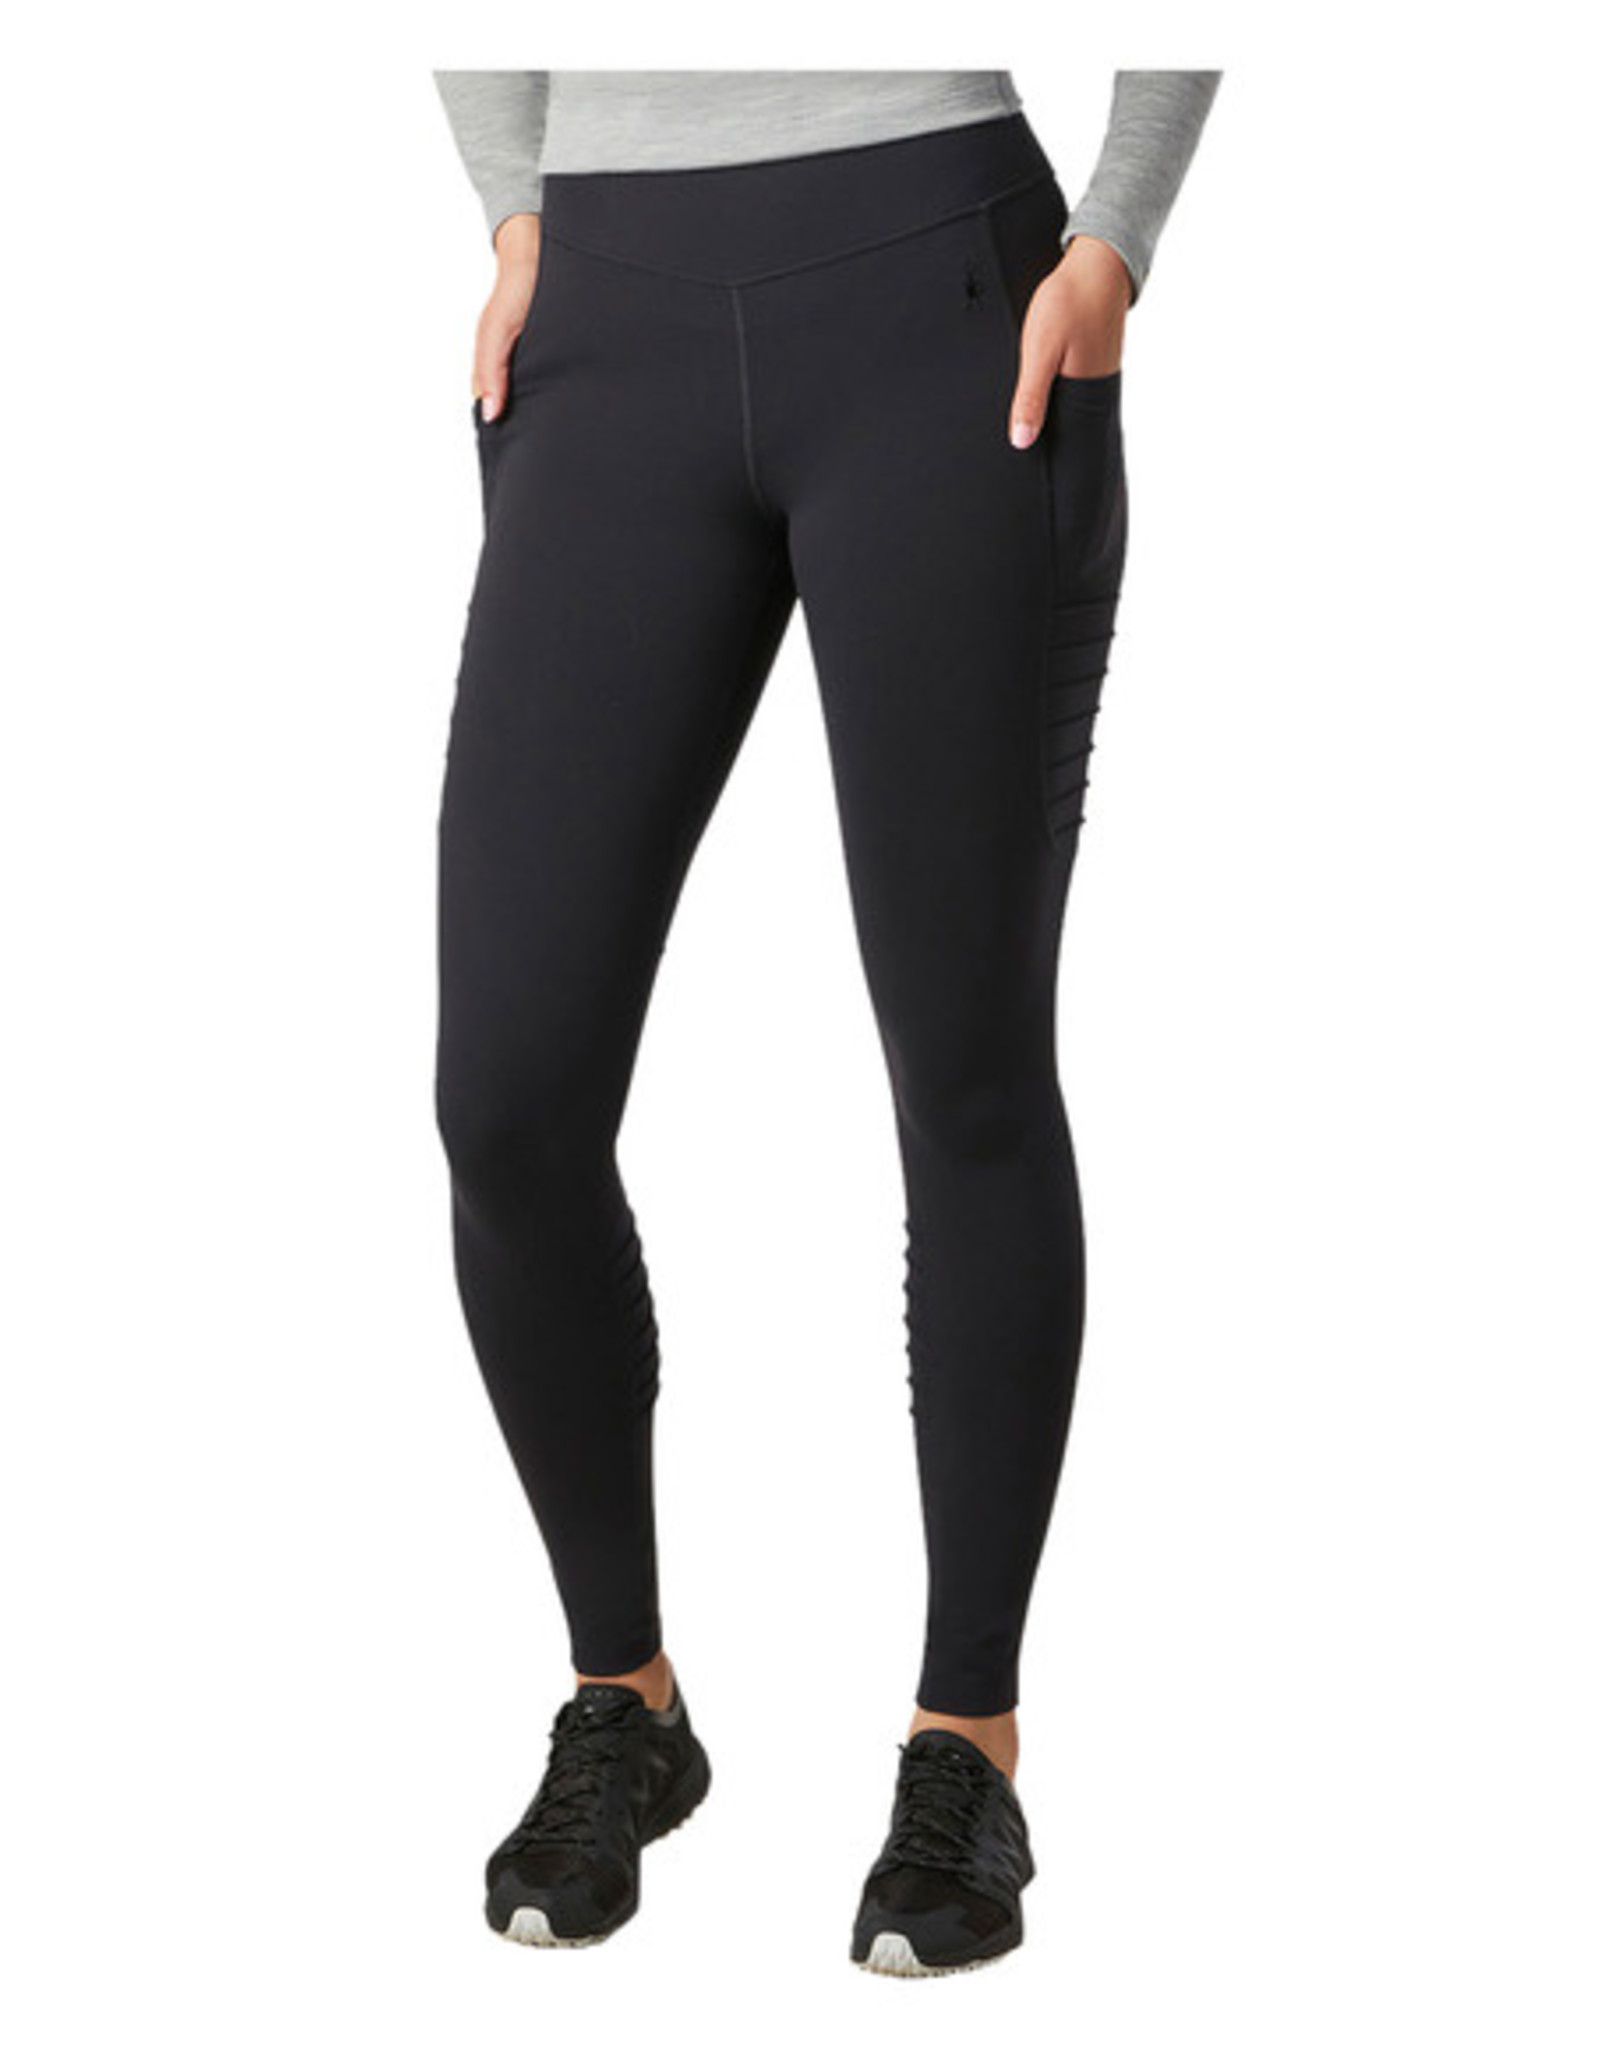 https://cdn.shoplightspeed.com/shops/616615/files/49768786/1600x2048x1/smartwool-smartwool-womens-sport-moto-tights-black.jpg